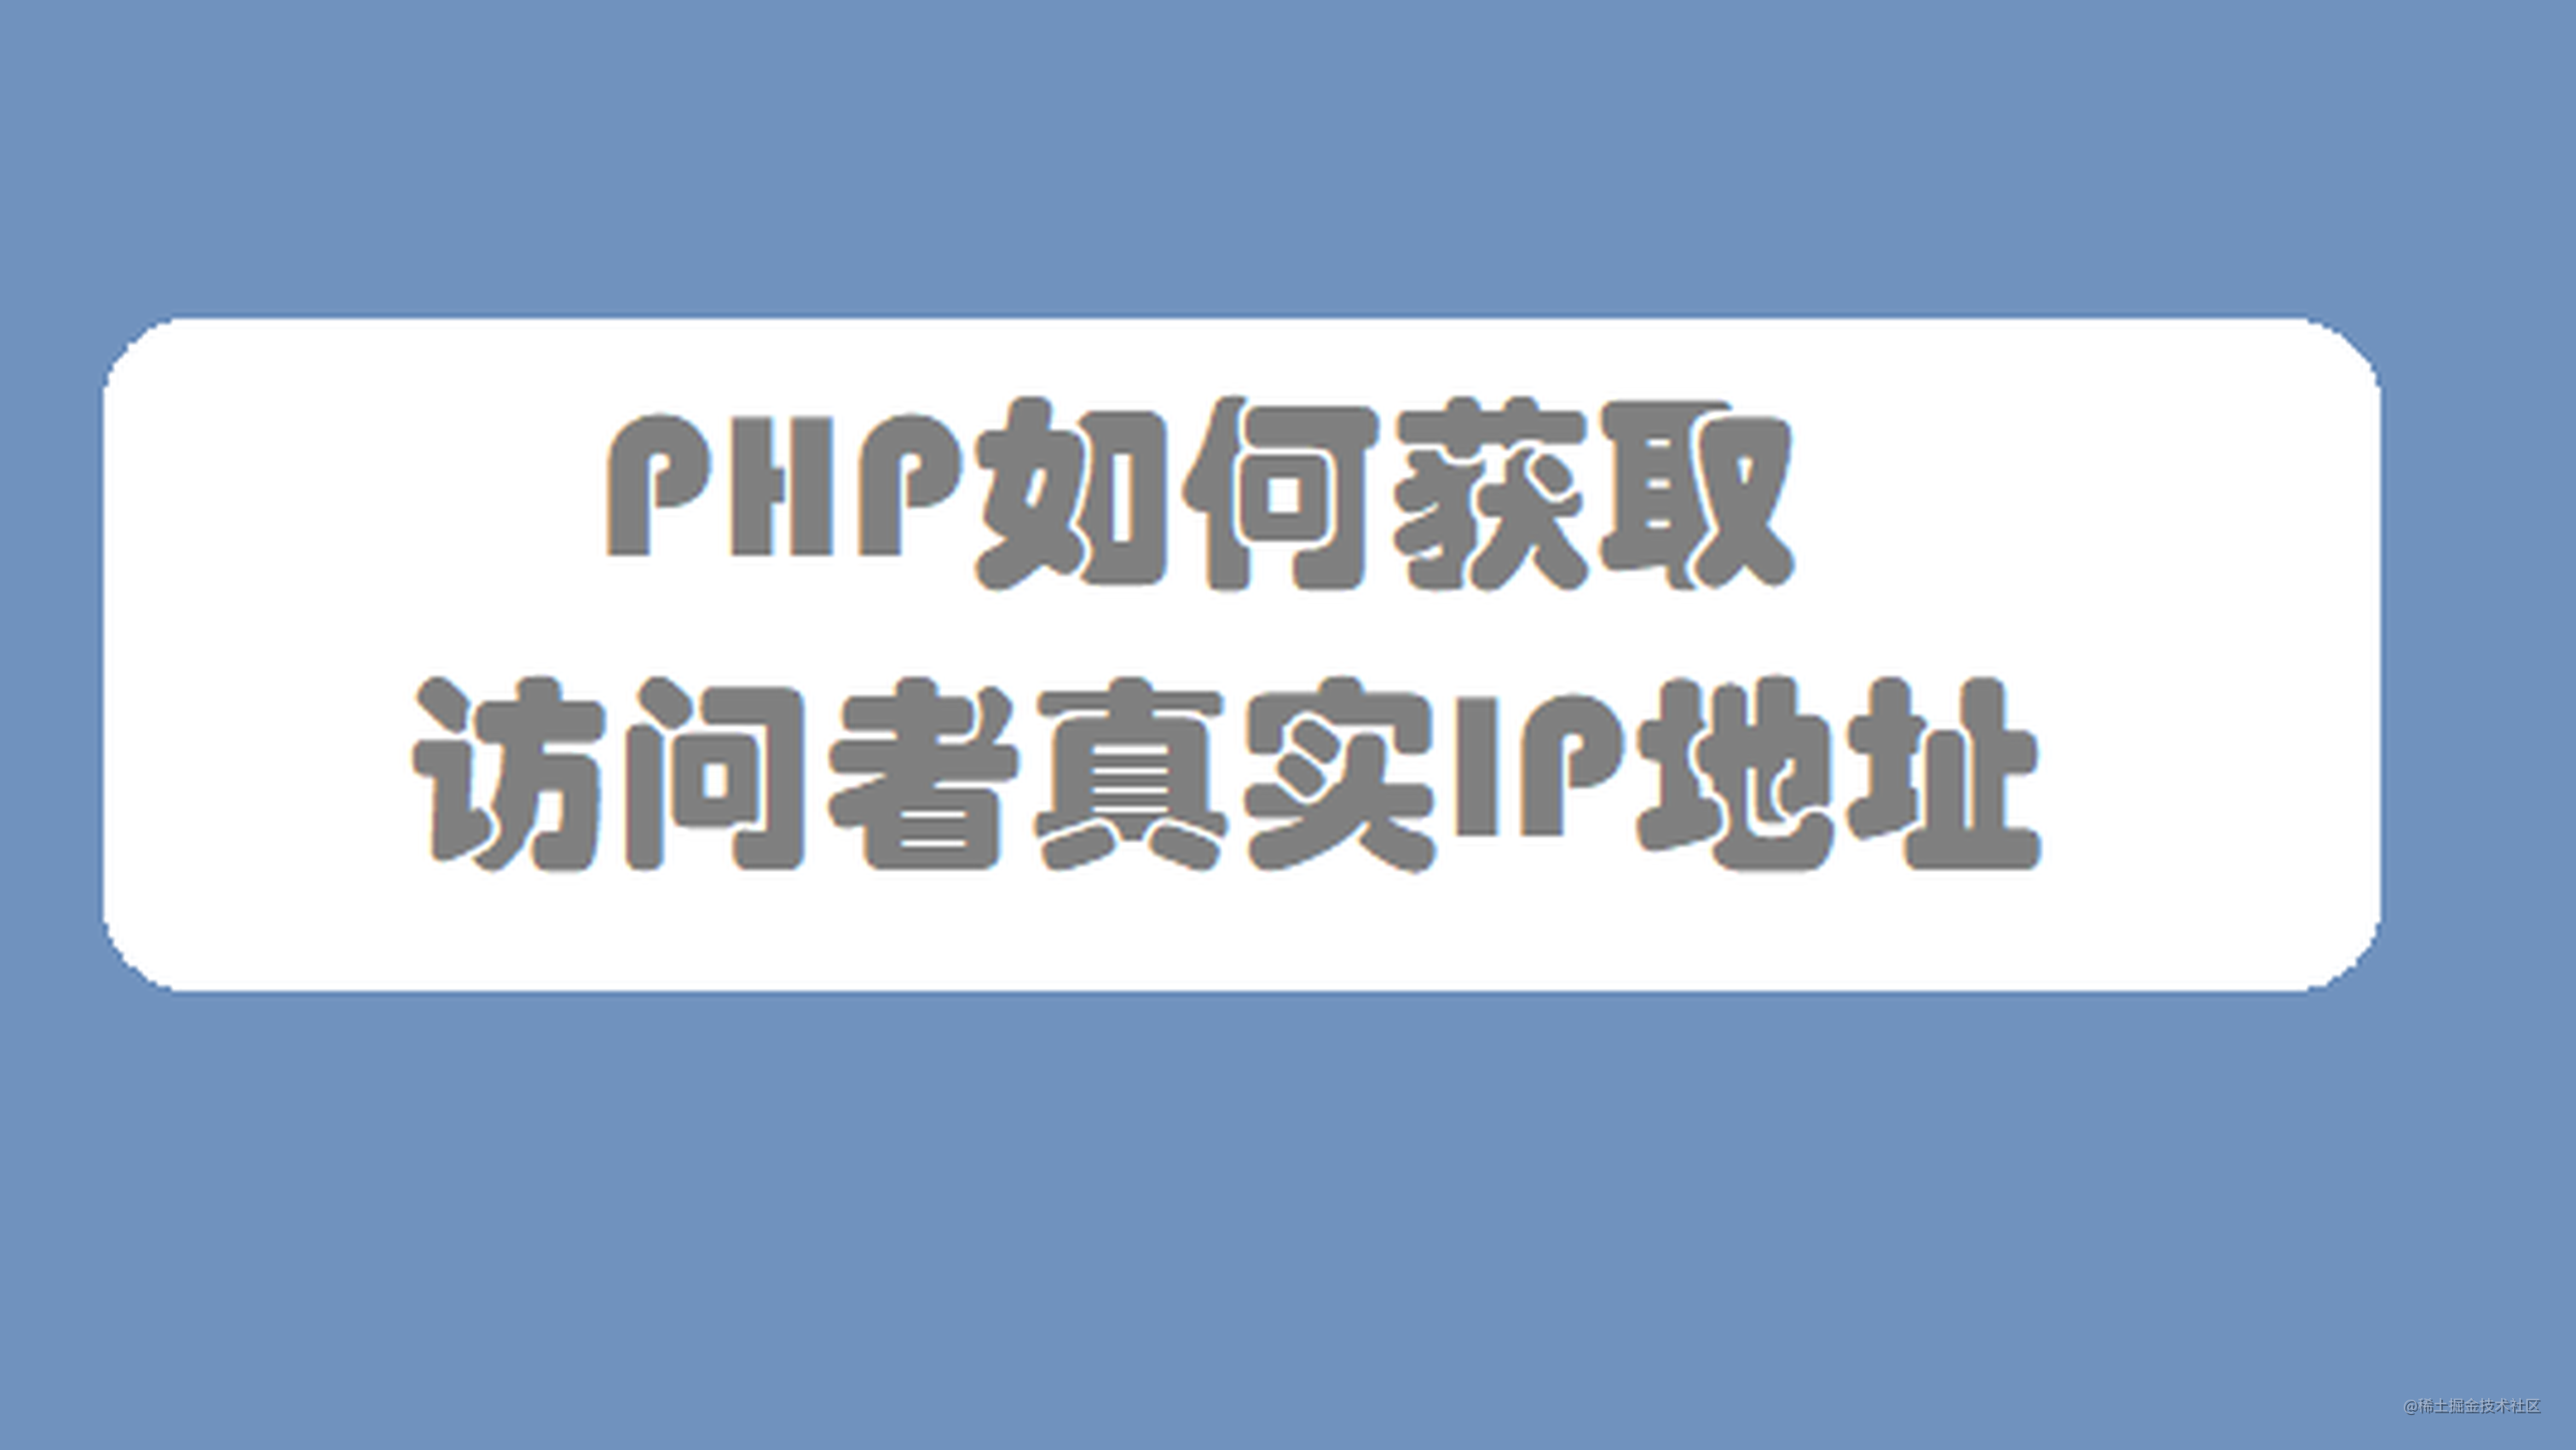 Simple ip locator php - grossic